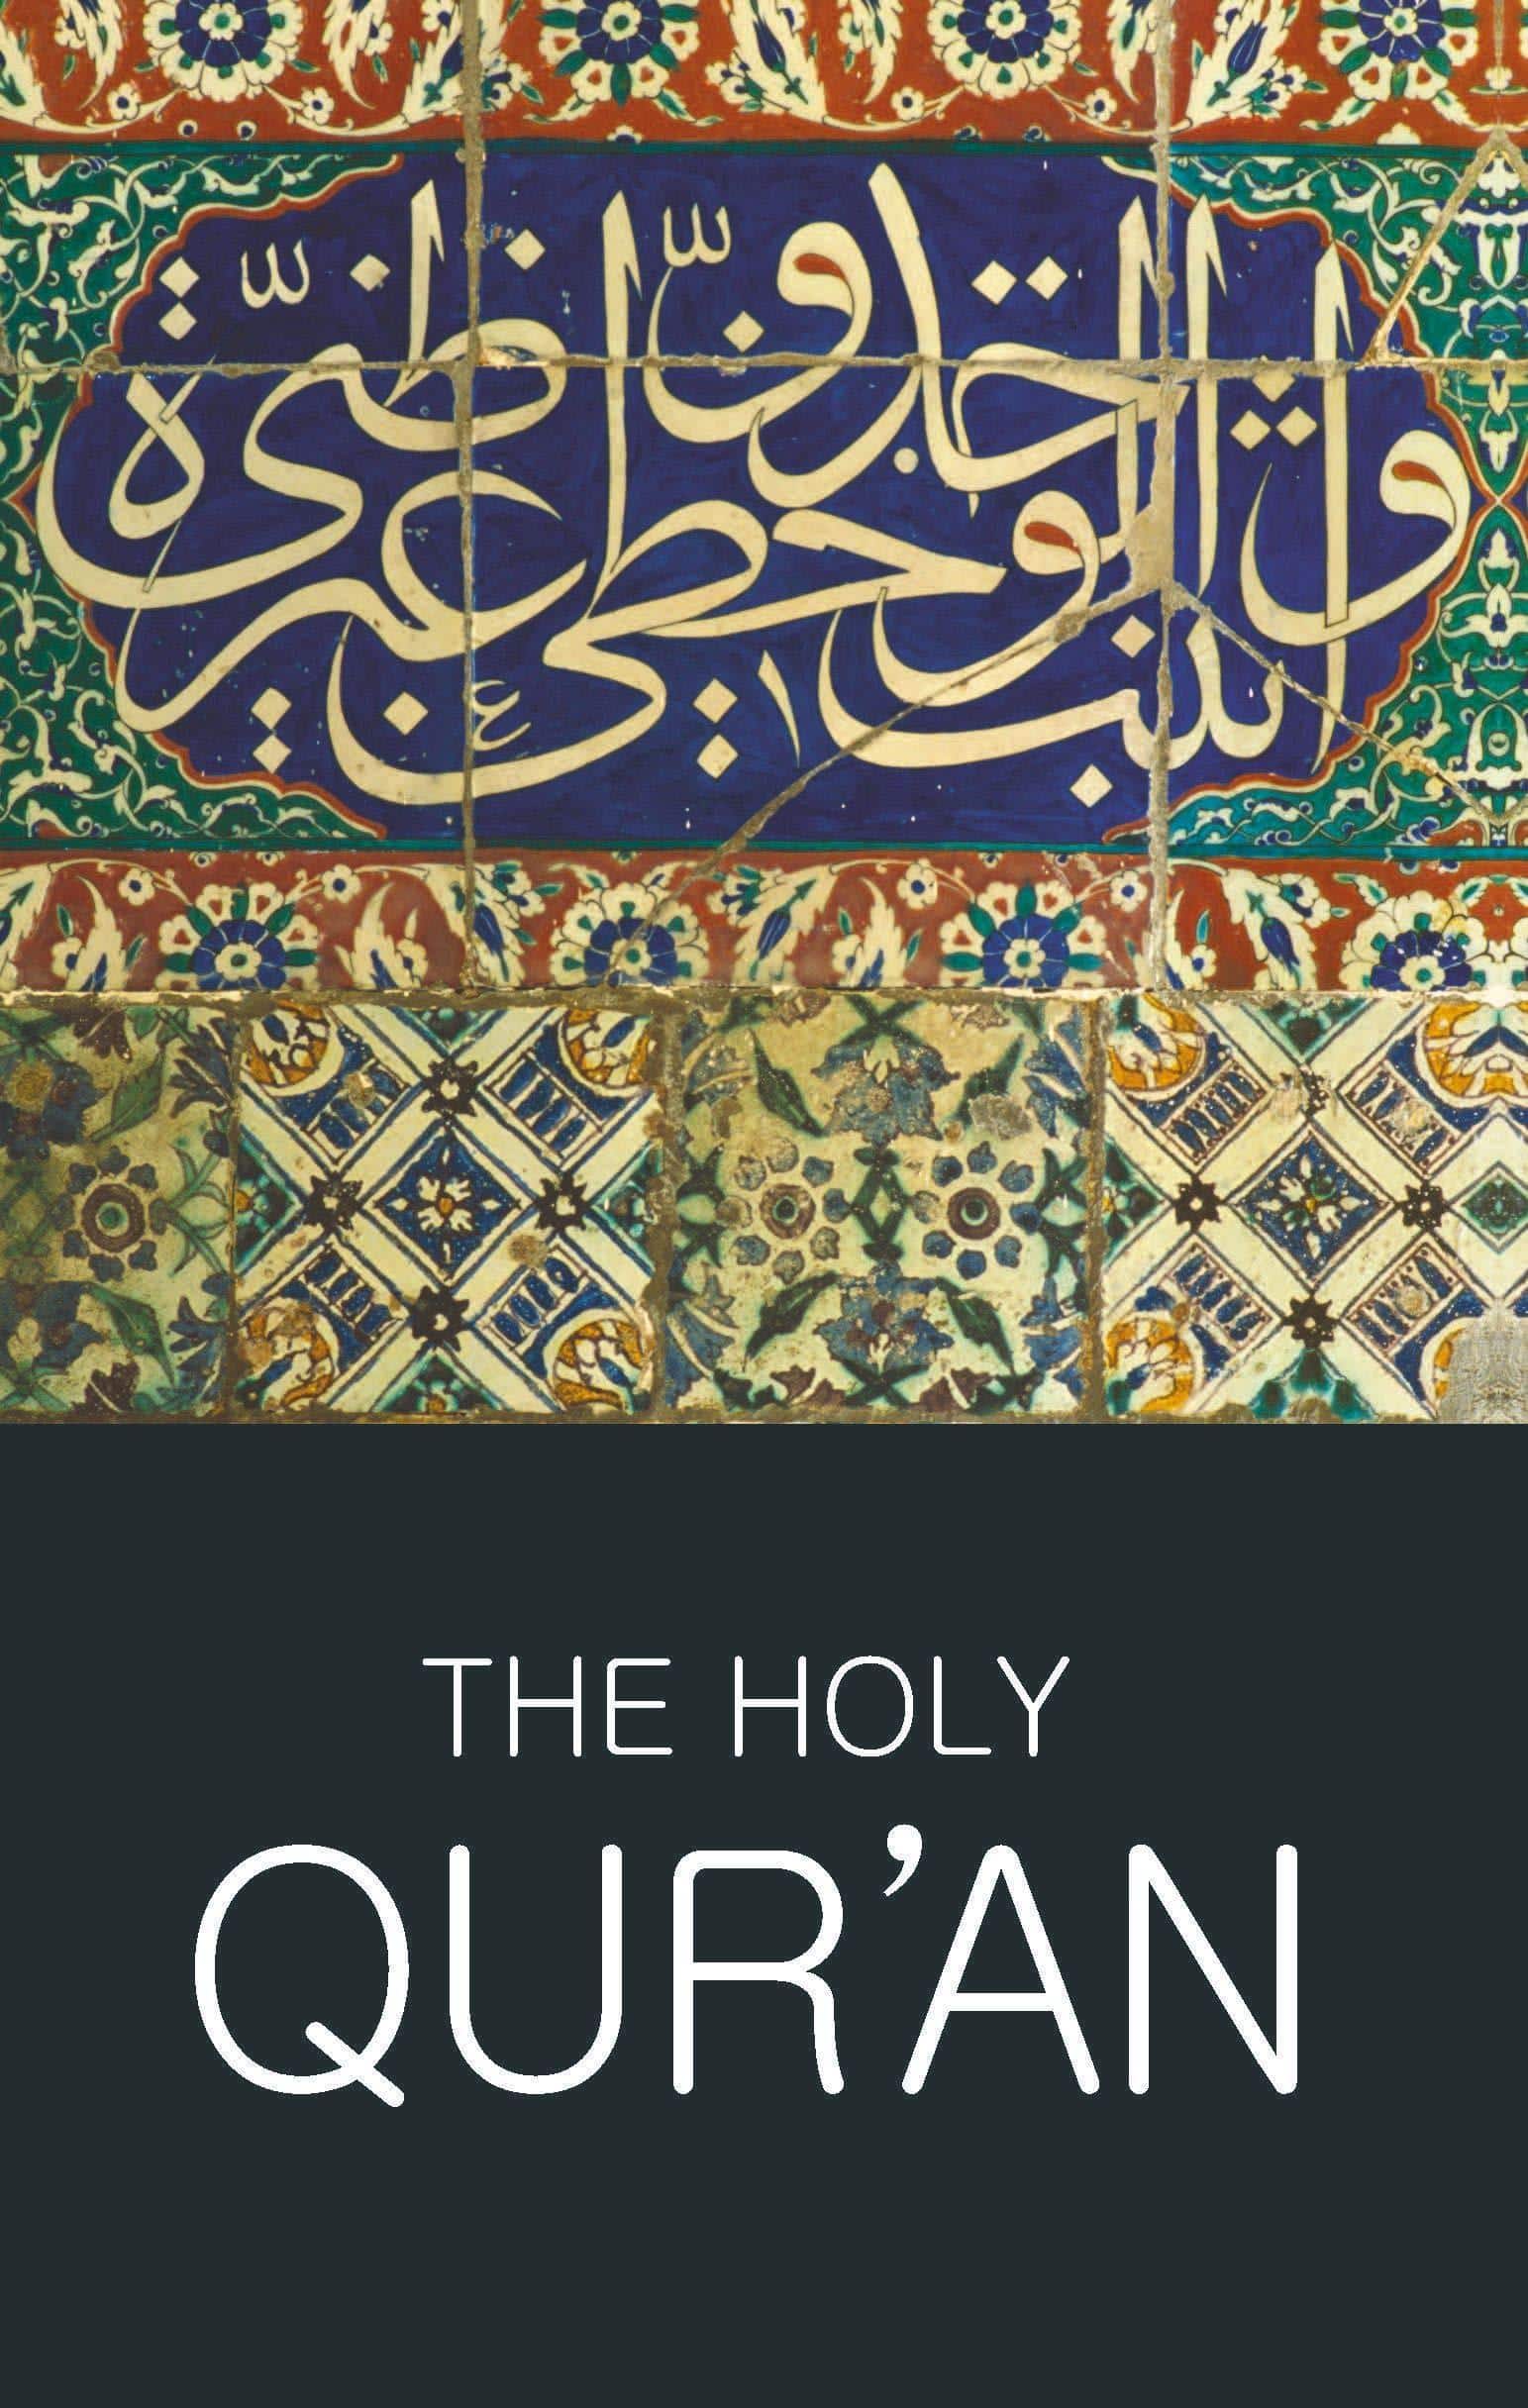 The Holy Qur'an - SureShot Books Publishing LLC